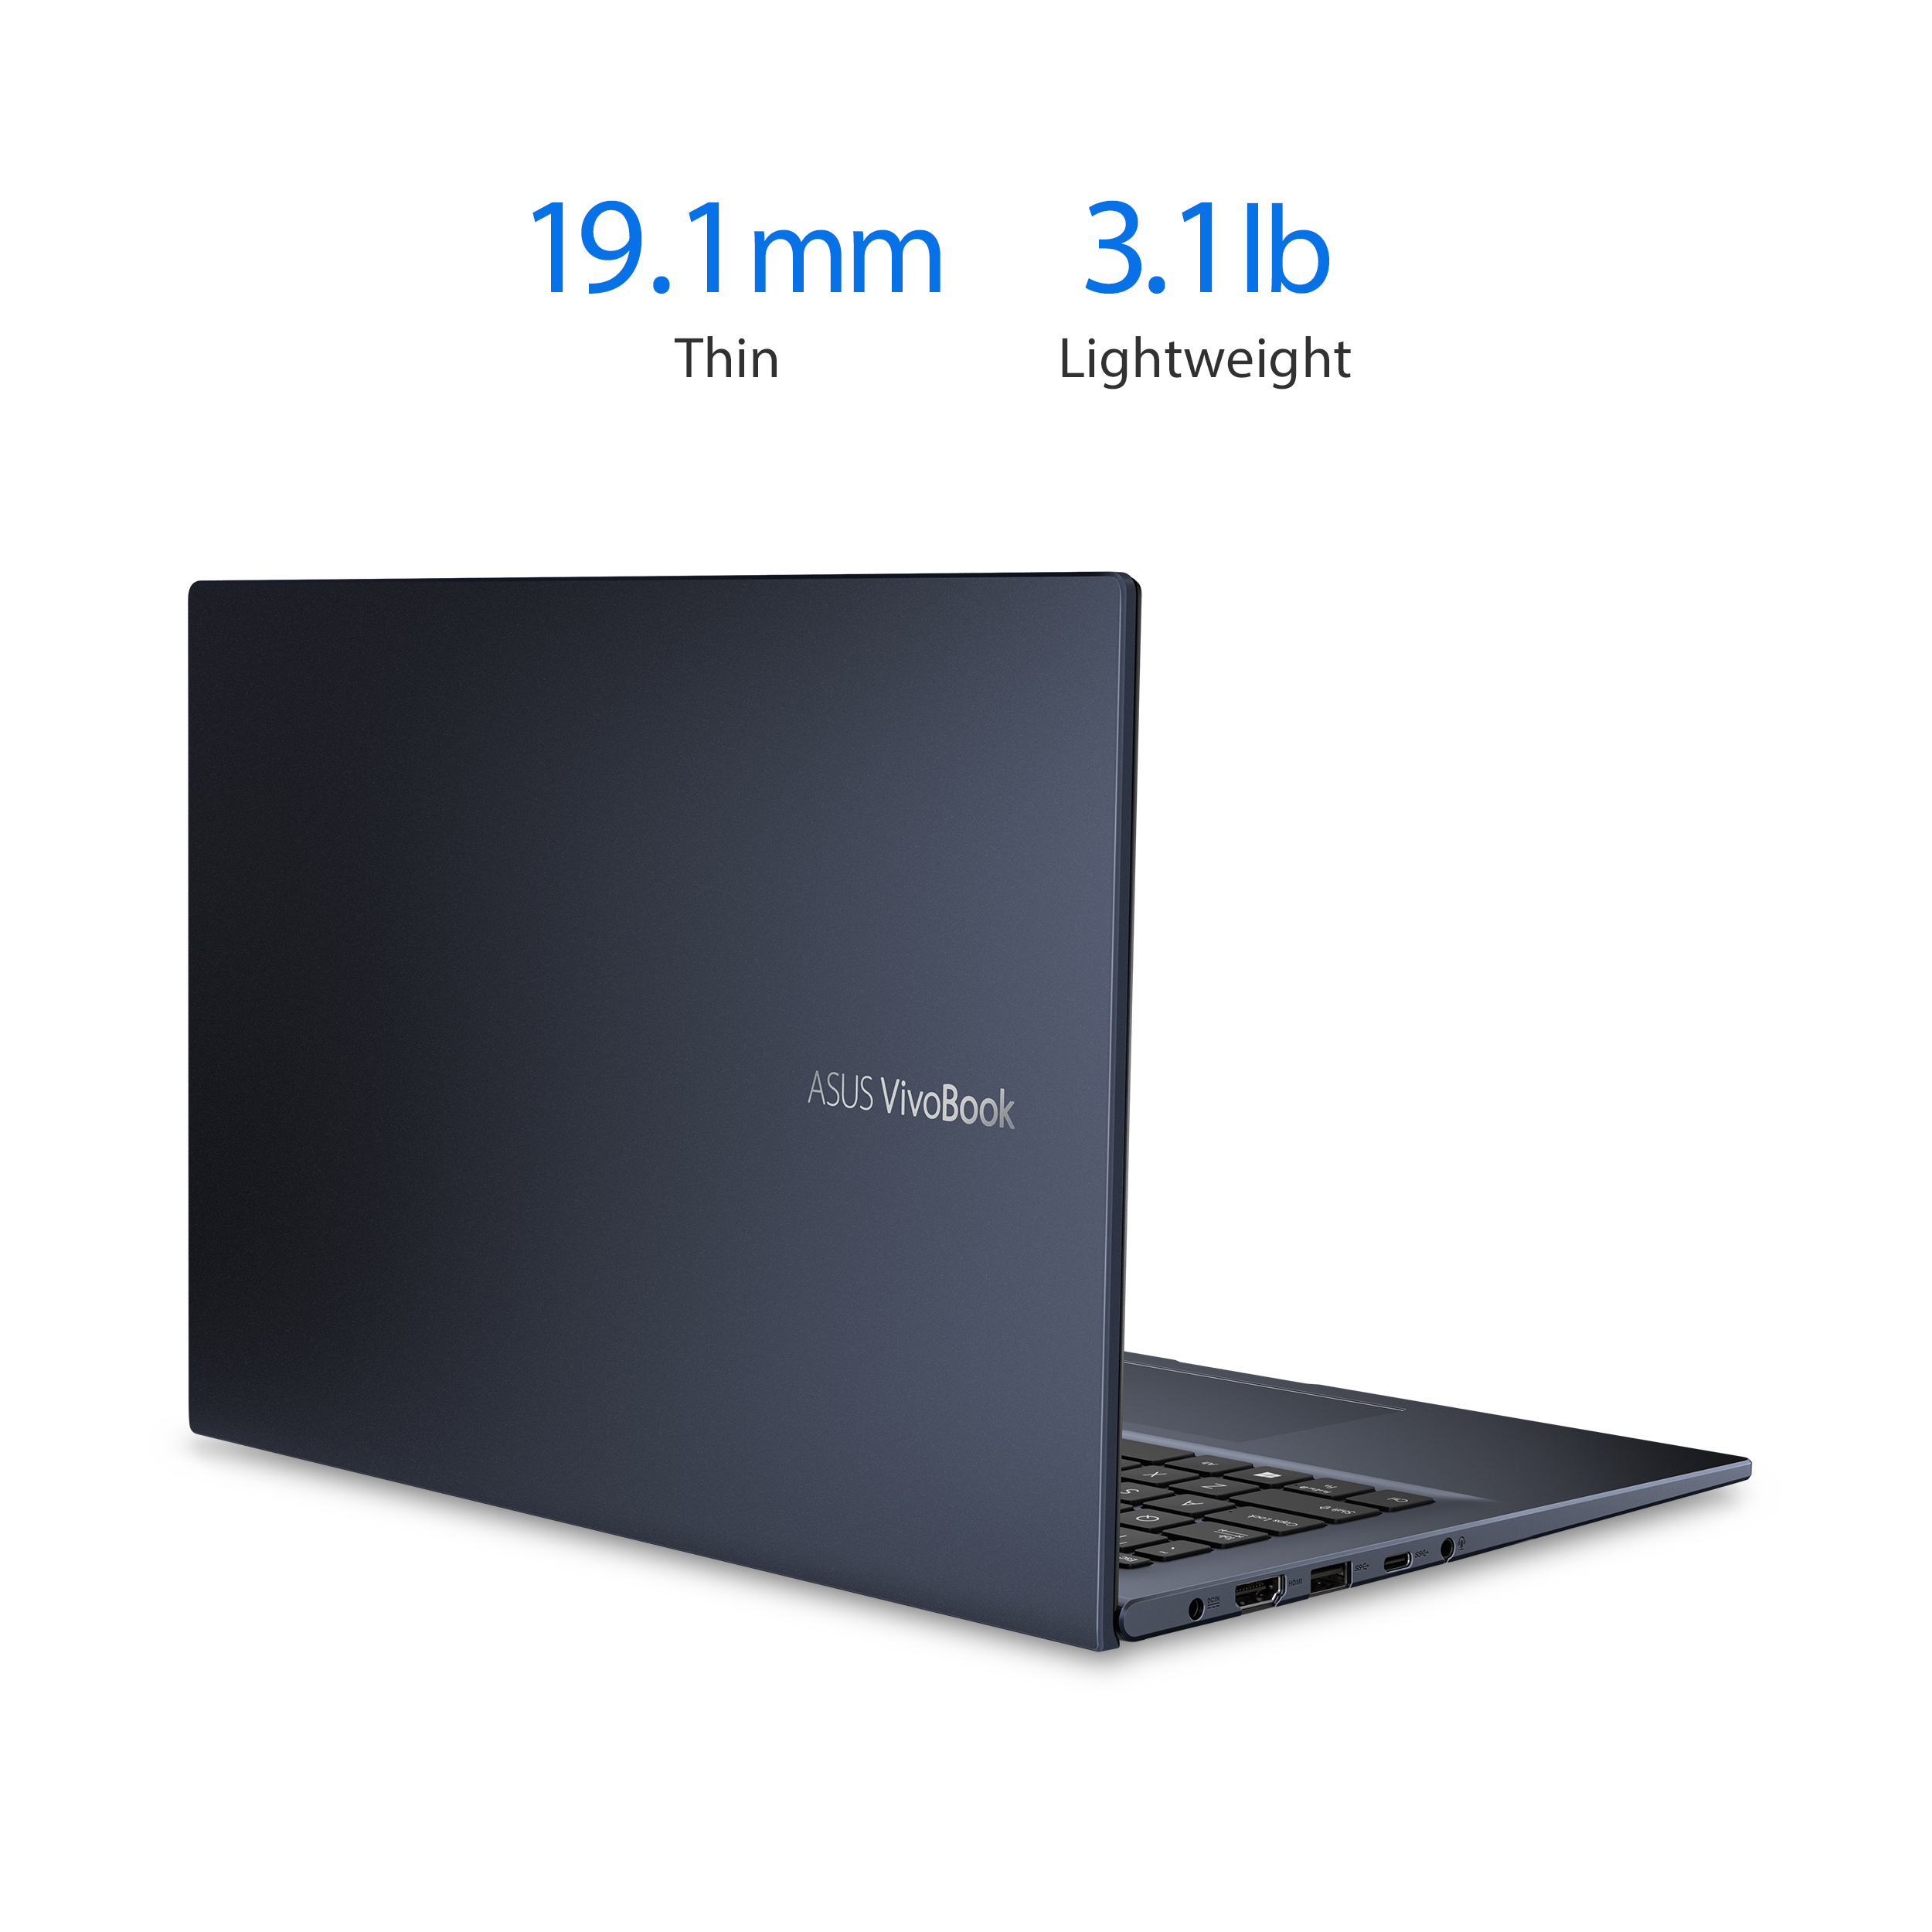 Asus VivoBook 14 Premium Thin and Light Laptop 14” FHD Display AMD 4-Core Ryzen 5 3500U 8GB DDR4 256GB SSD Backlit Keyboard Fingerprint USB-C HDMI Wifi6 Harman Win10 - image 5 of 6